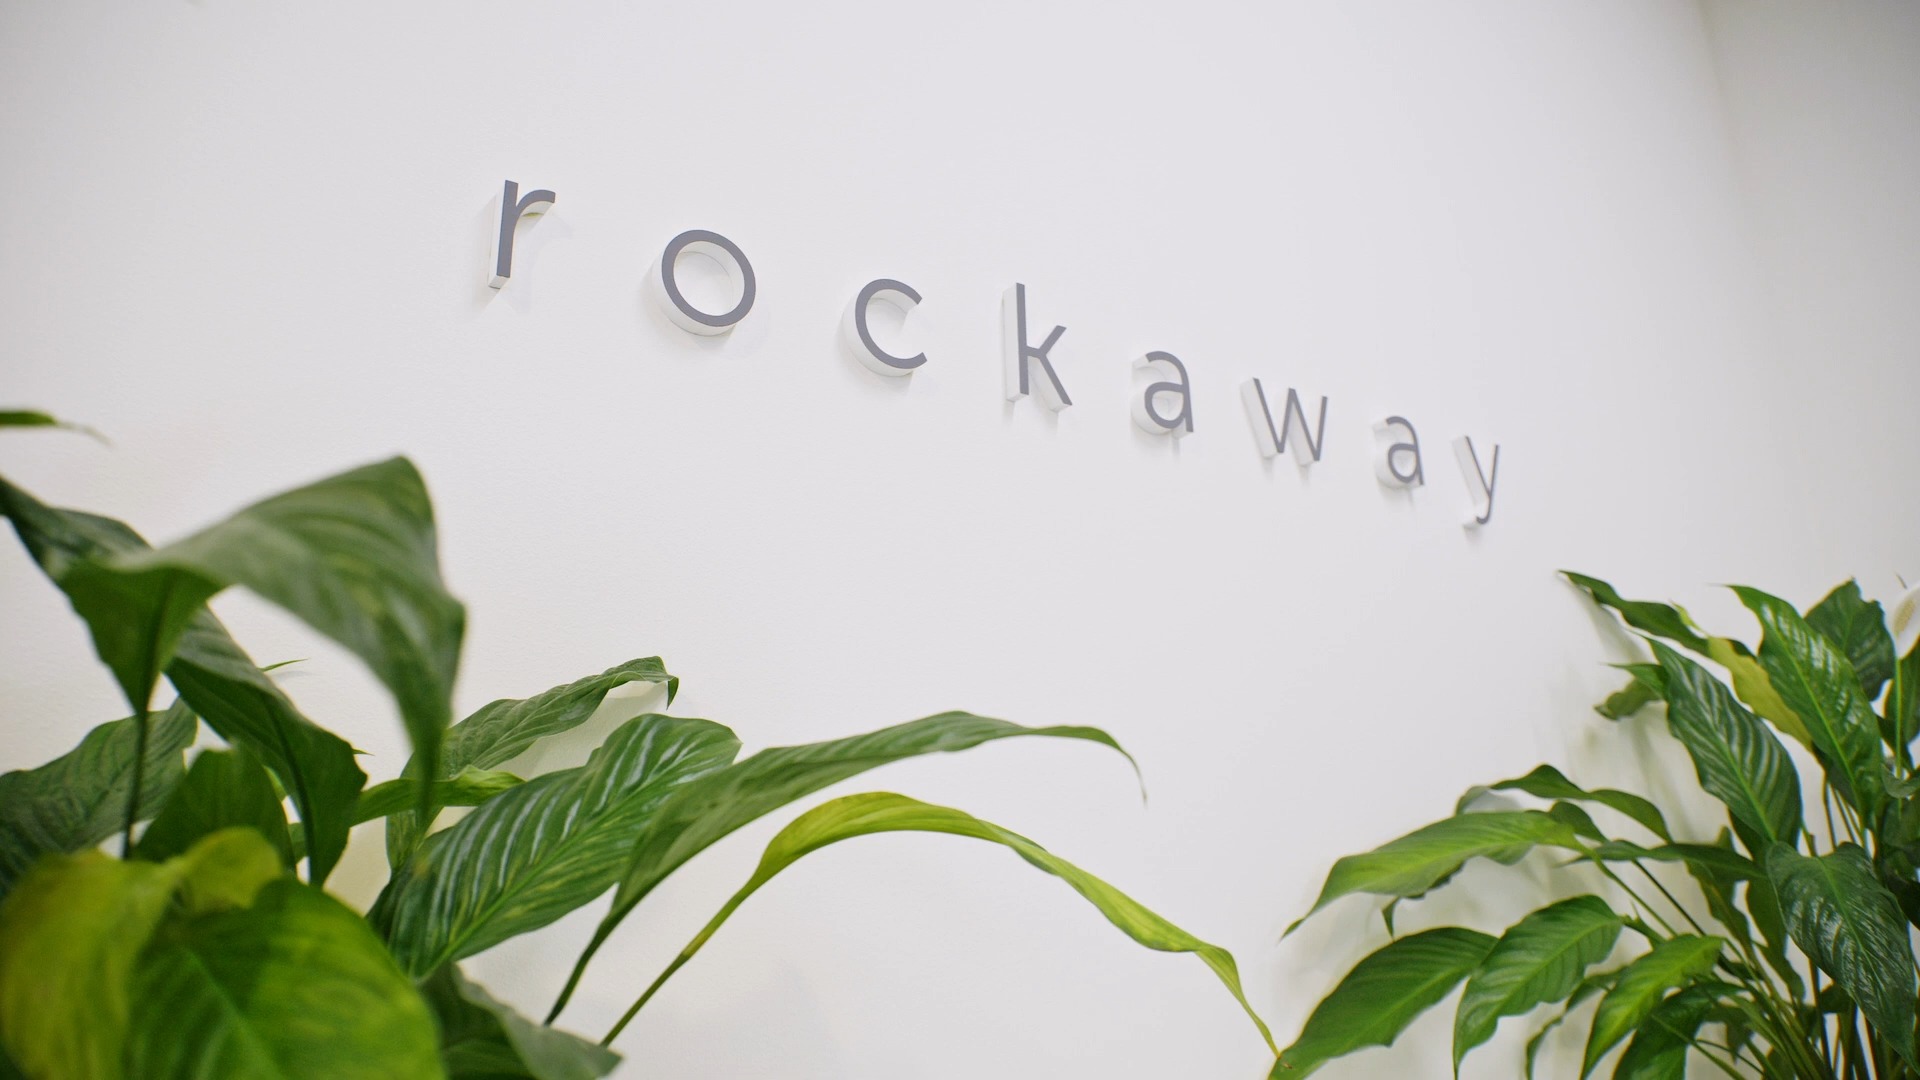 Rockaway Academy